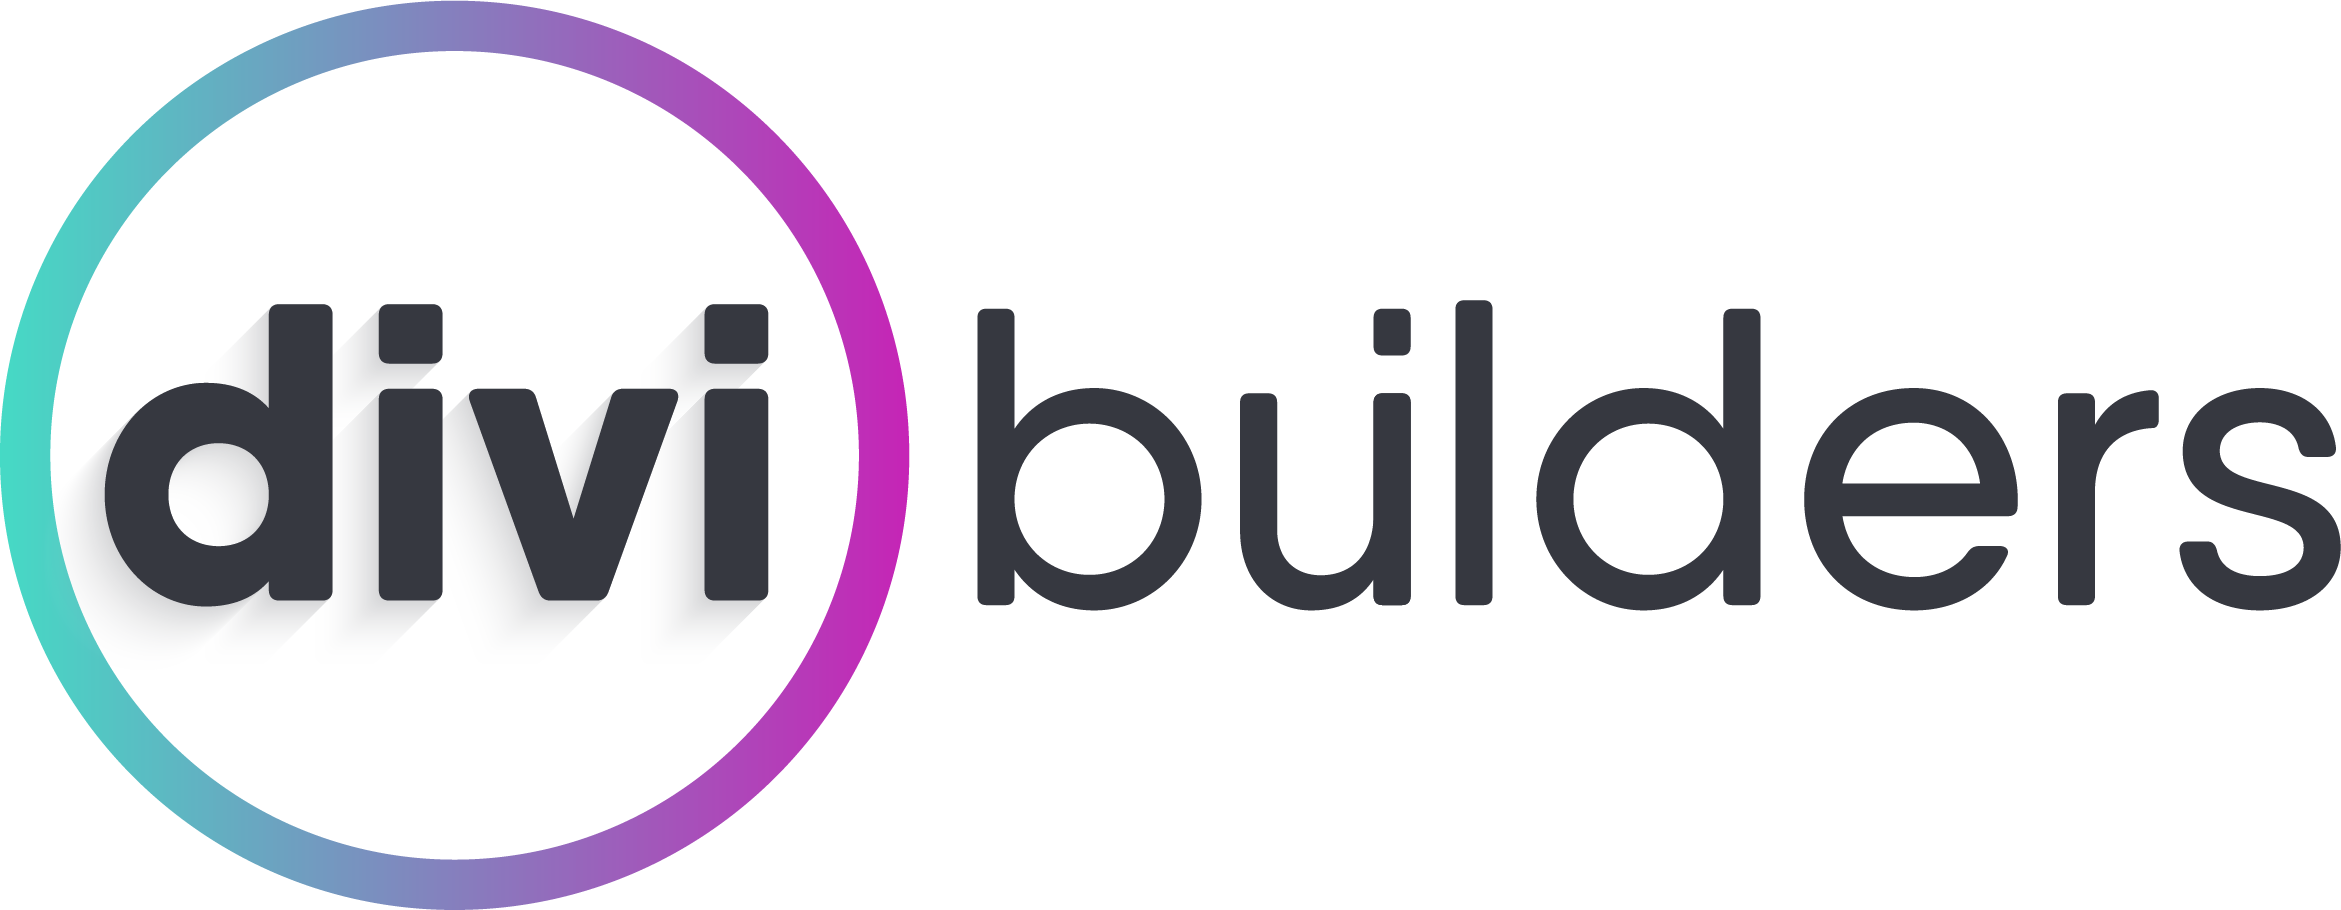 immagine del logo divi builder